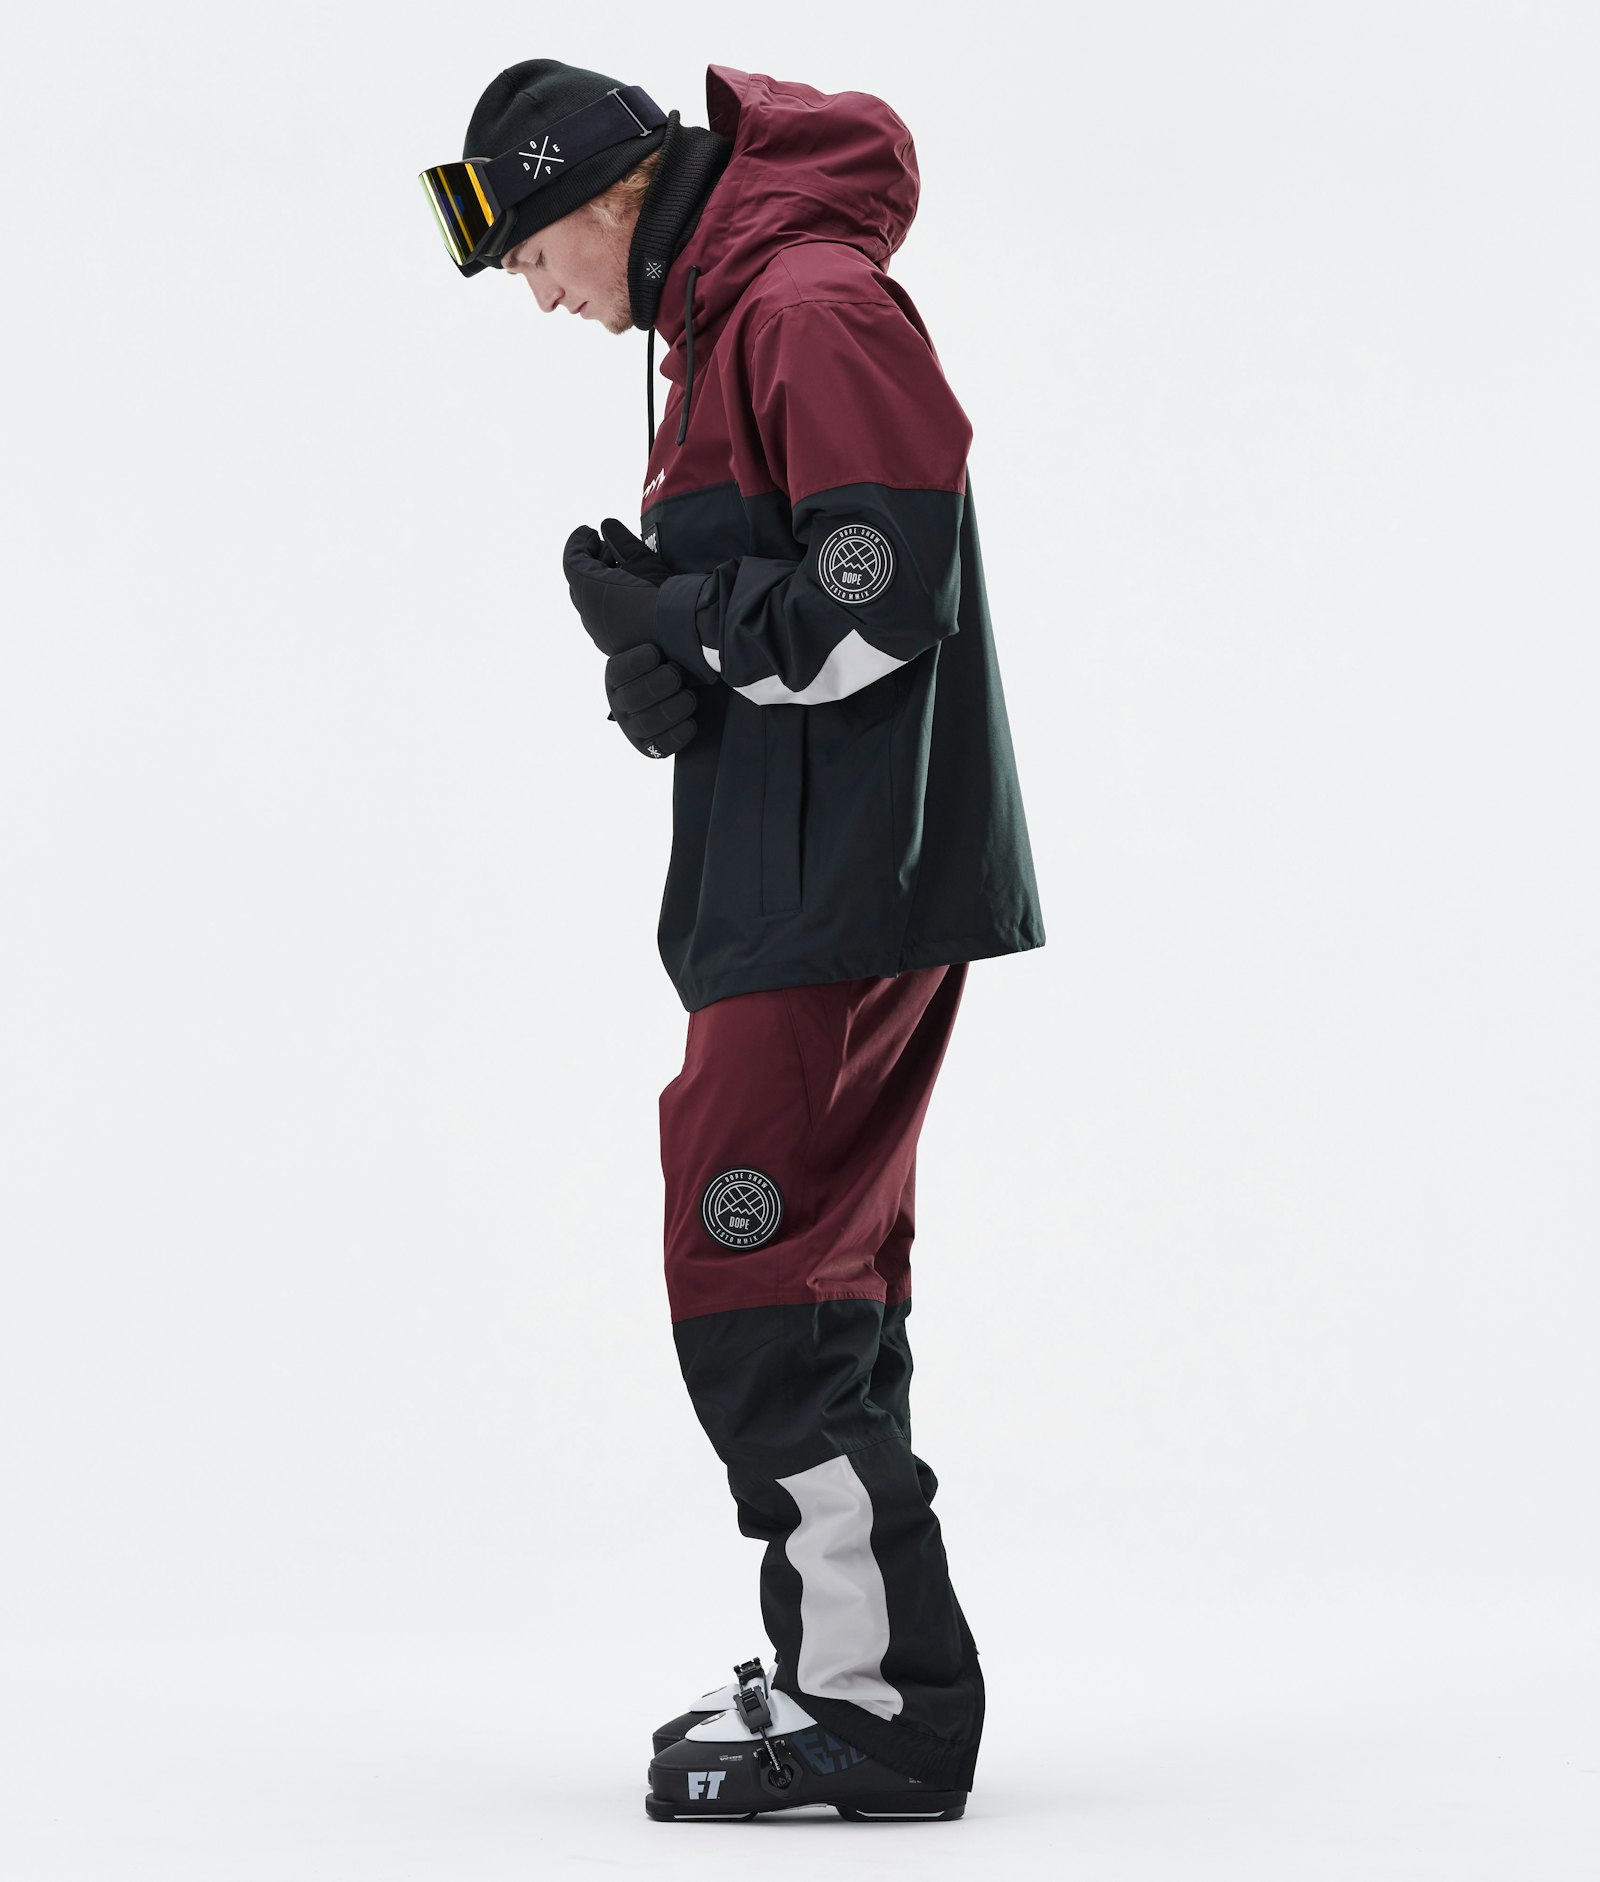 Dope Blizzard 2020 Ski Jacket Men Limited Edition Burgundy Multicolour